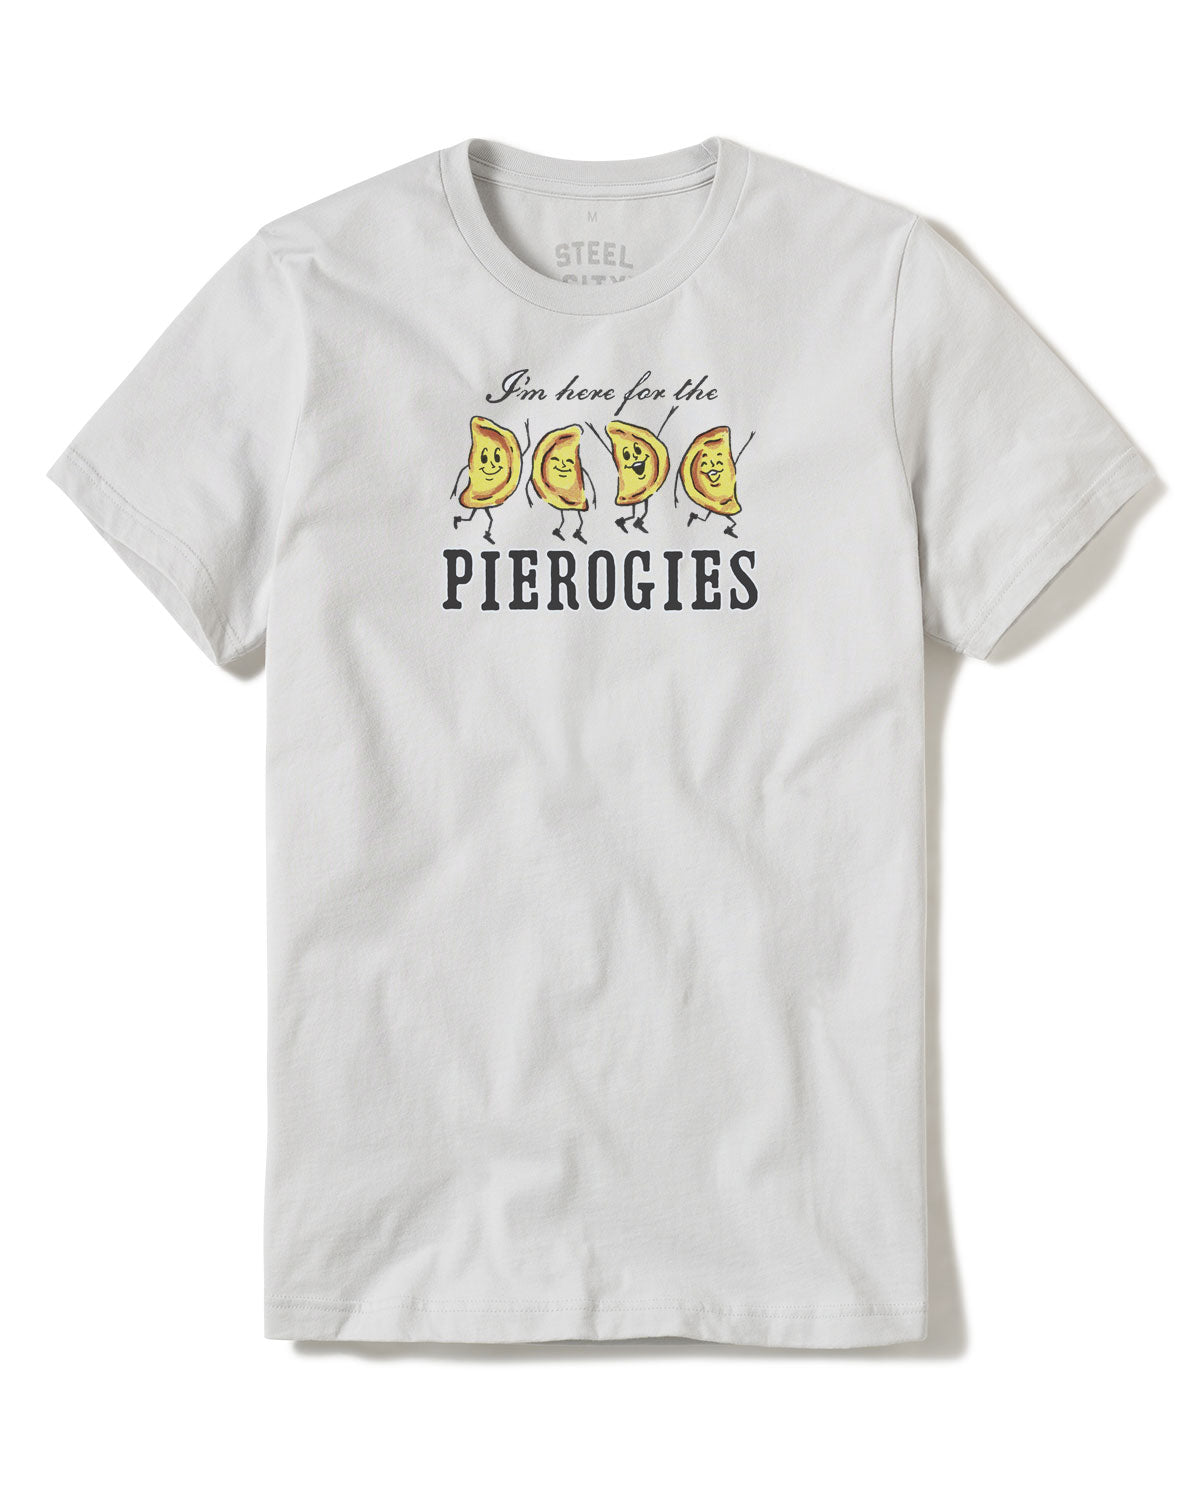 Pittsburgh Pirates Mrs. T's Pierogies 2022 Shirt - Breakingz Apparel